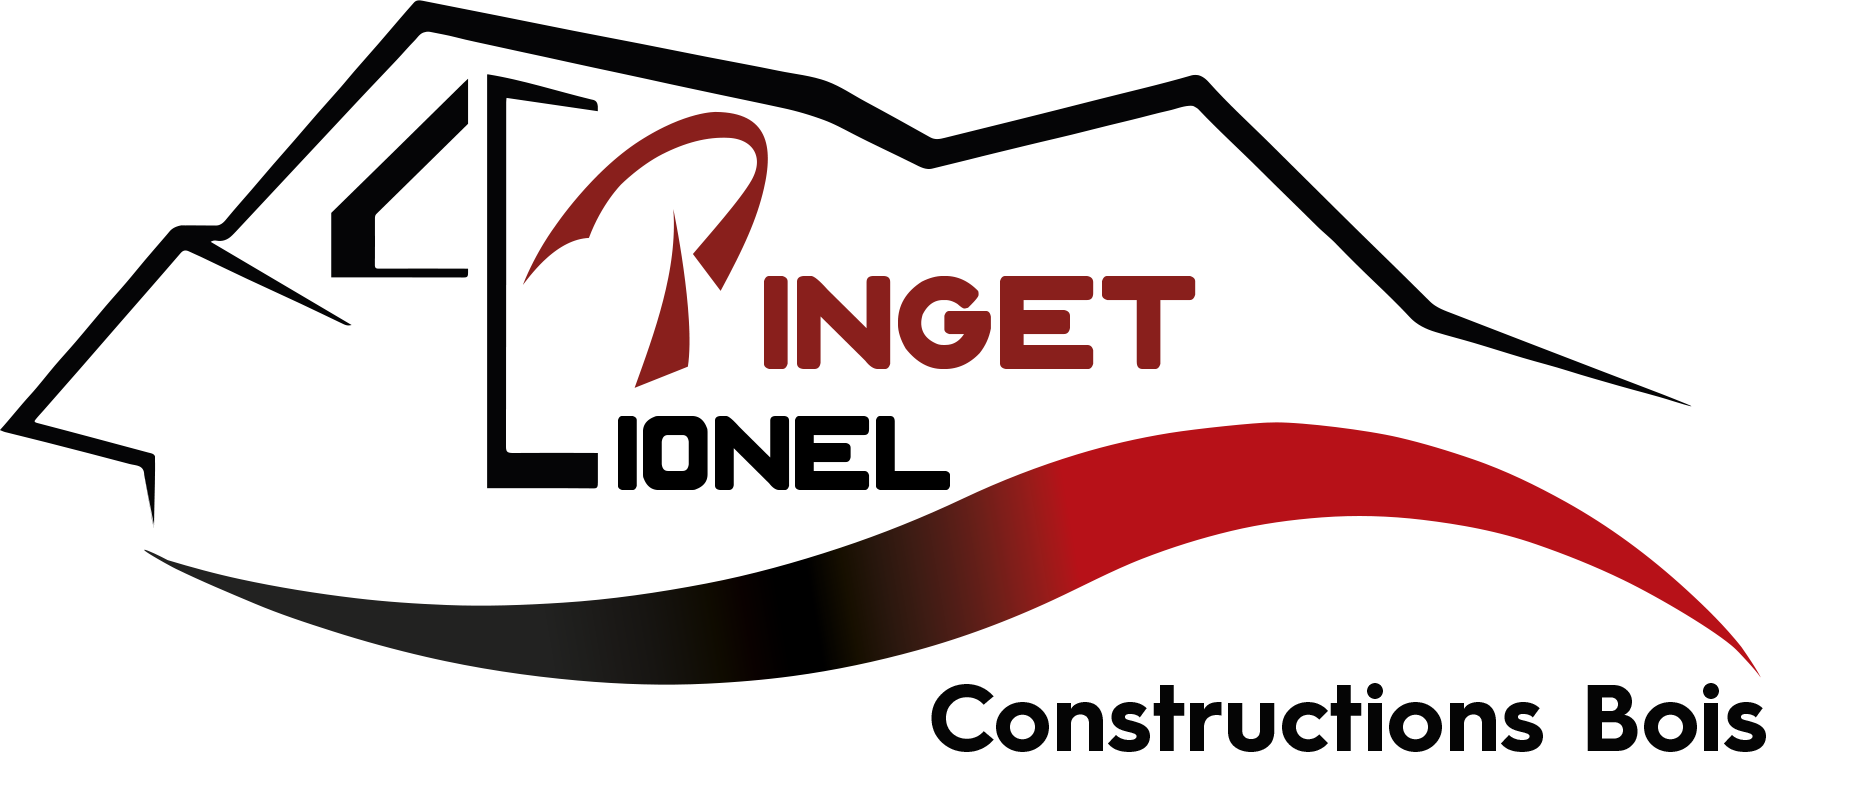 Constructions Pinget